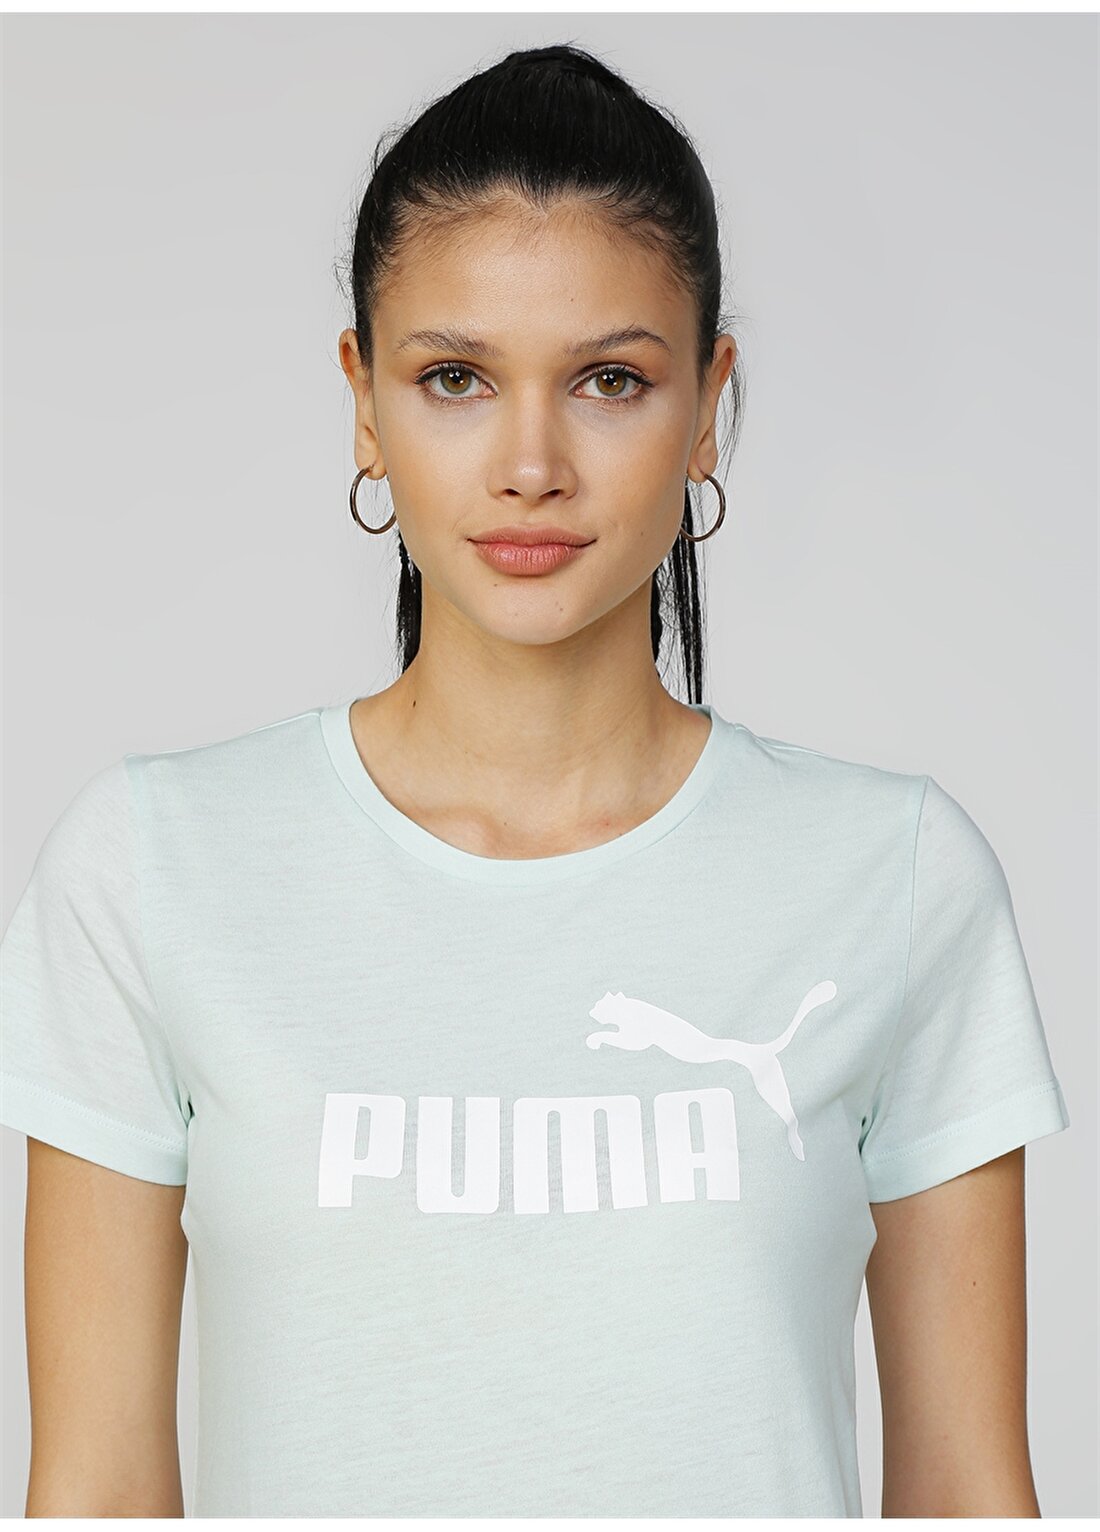 Puma Essentials+ Heather Tee T-Shirt